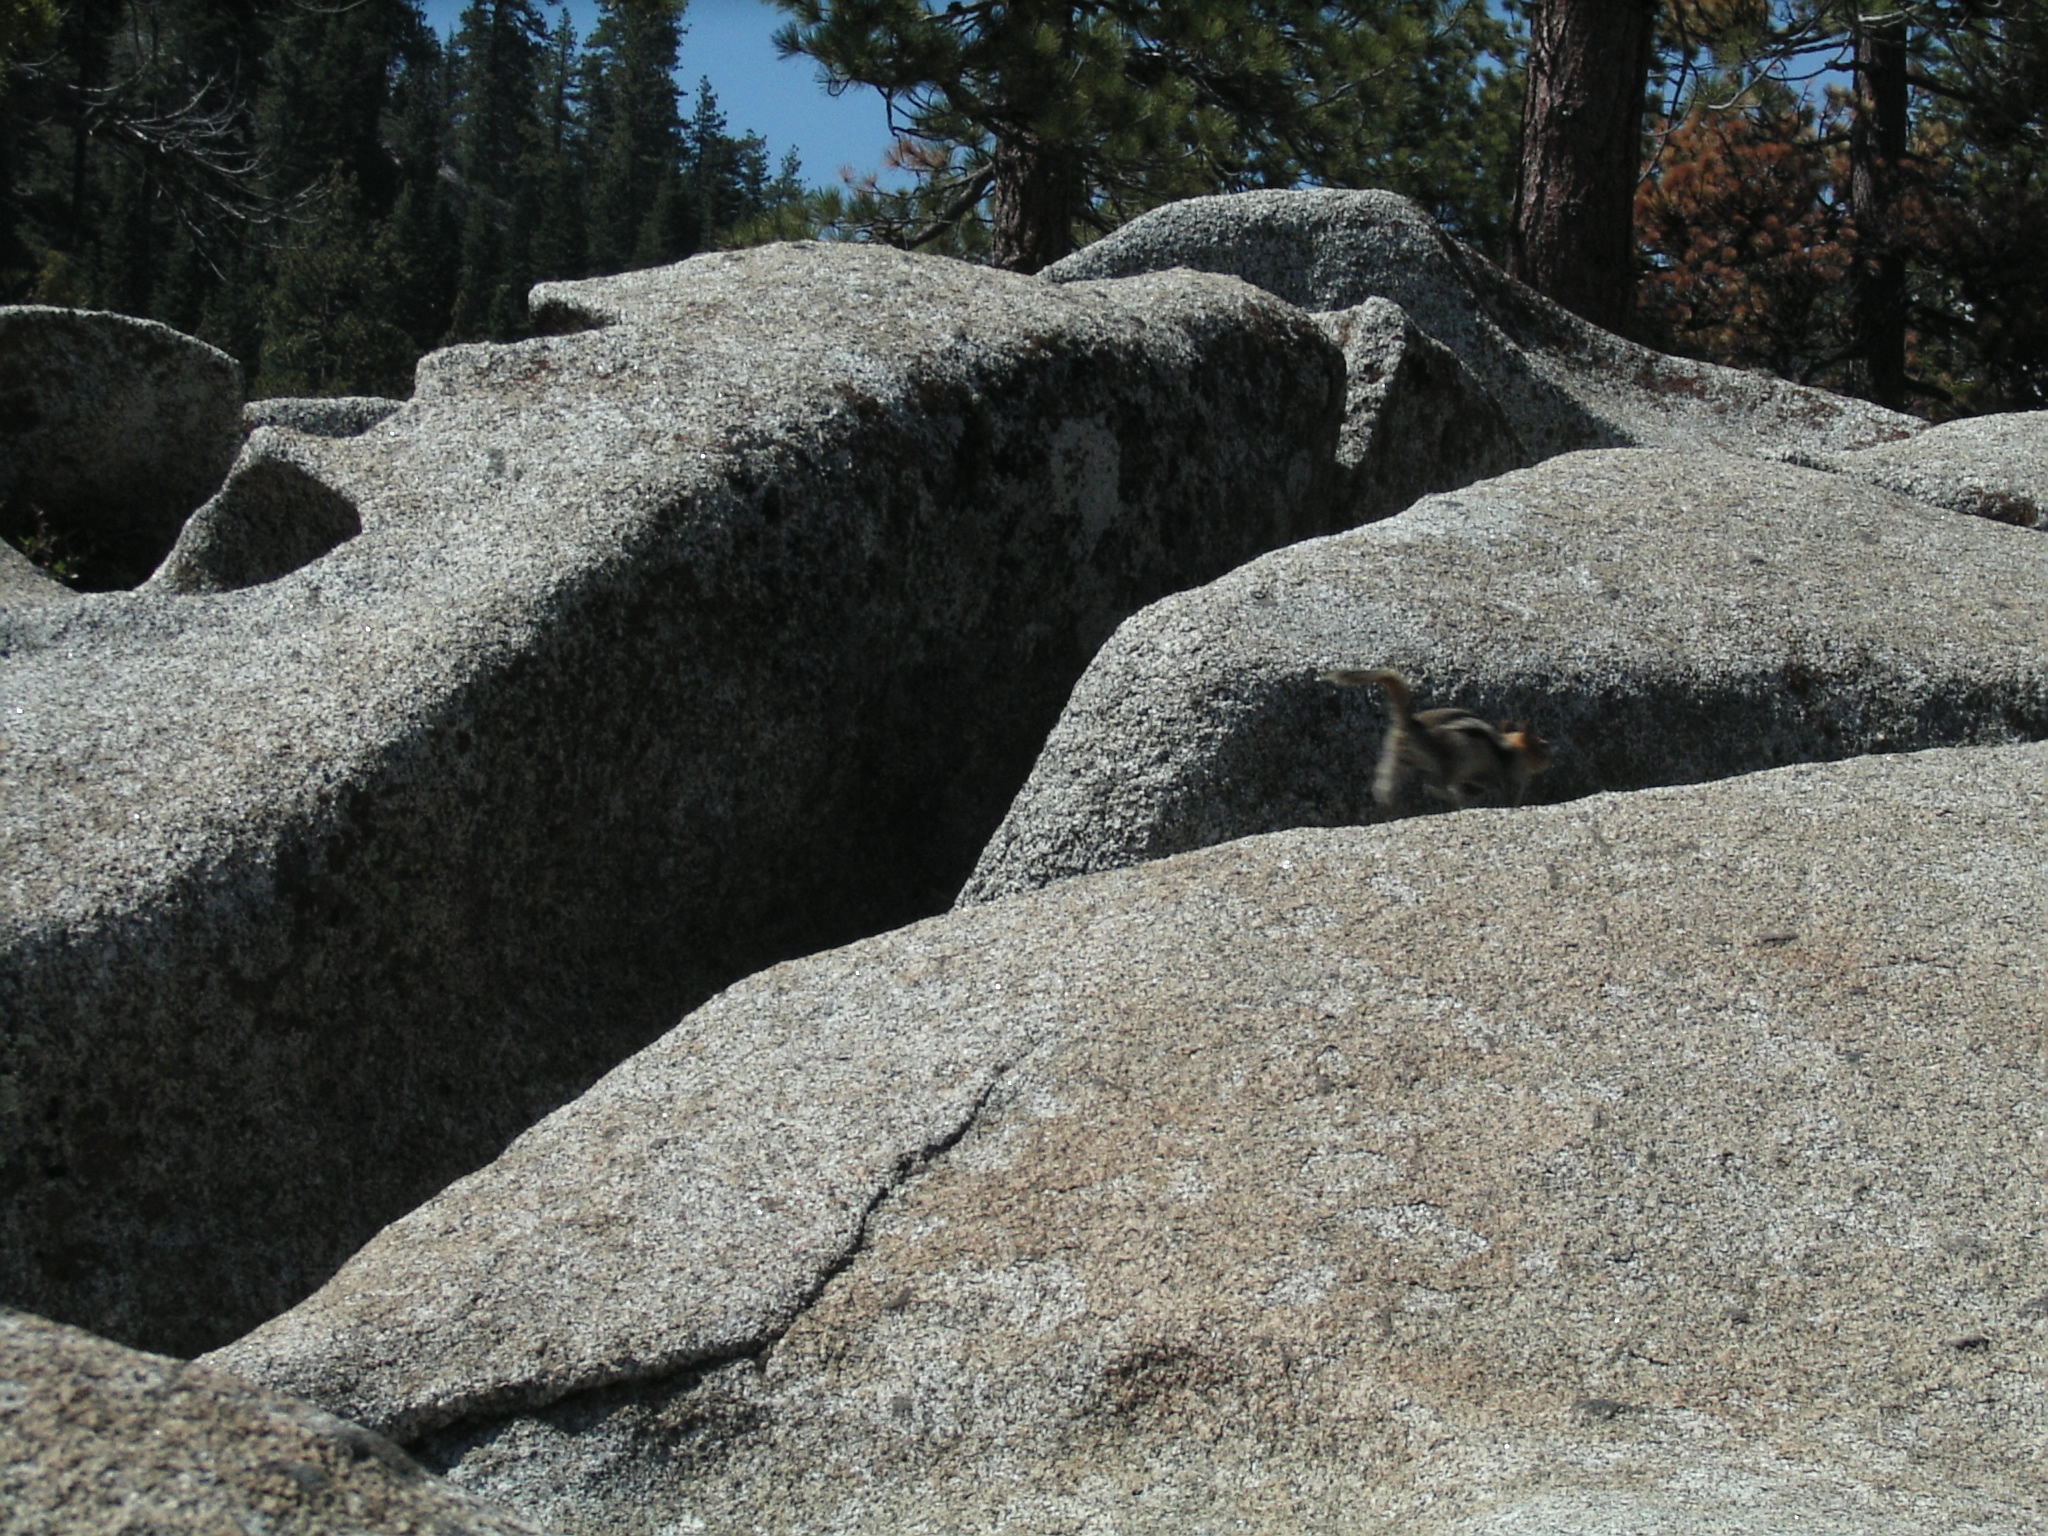 Smooth granite and chipmunk